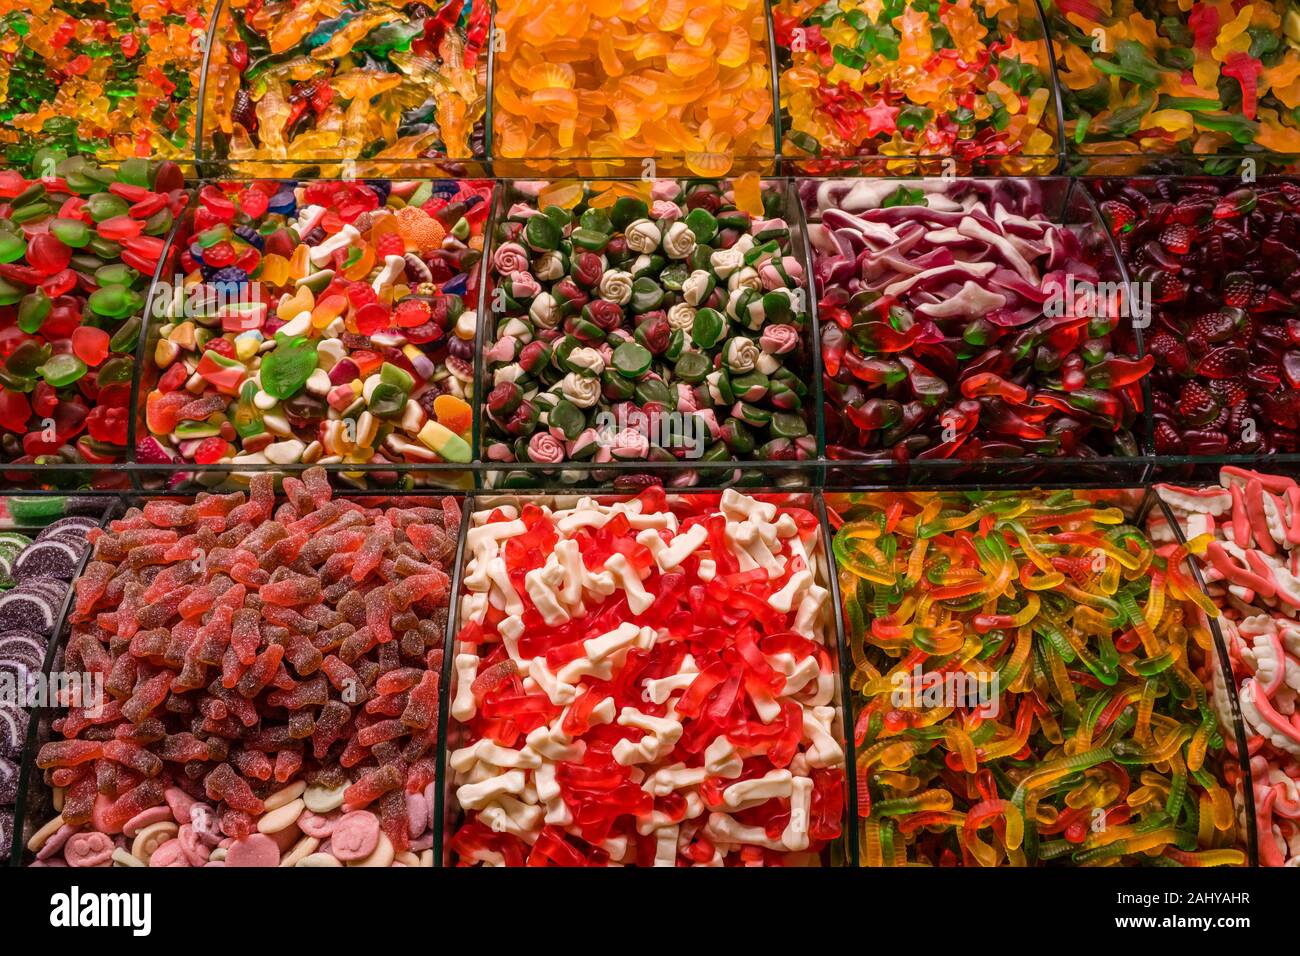 Big variety of colorful sweets are offered for sale inside the Spice Bazaar, Mısır Çarşısı, also known as Egyptian Bazaar Stock Photo